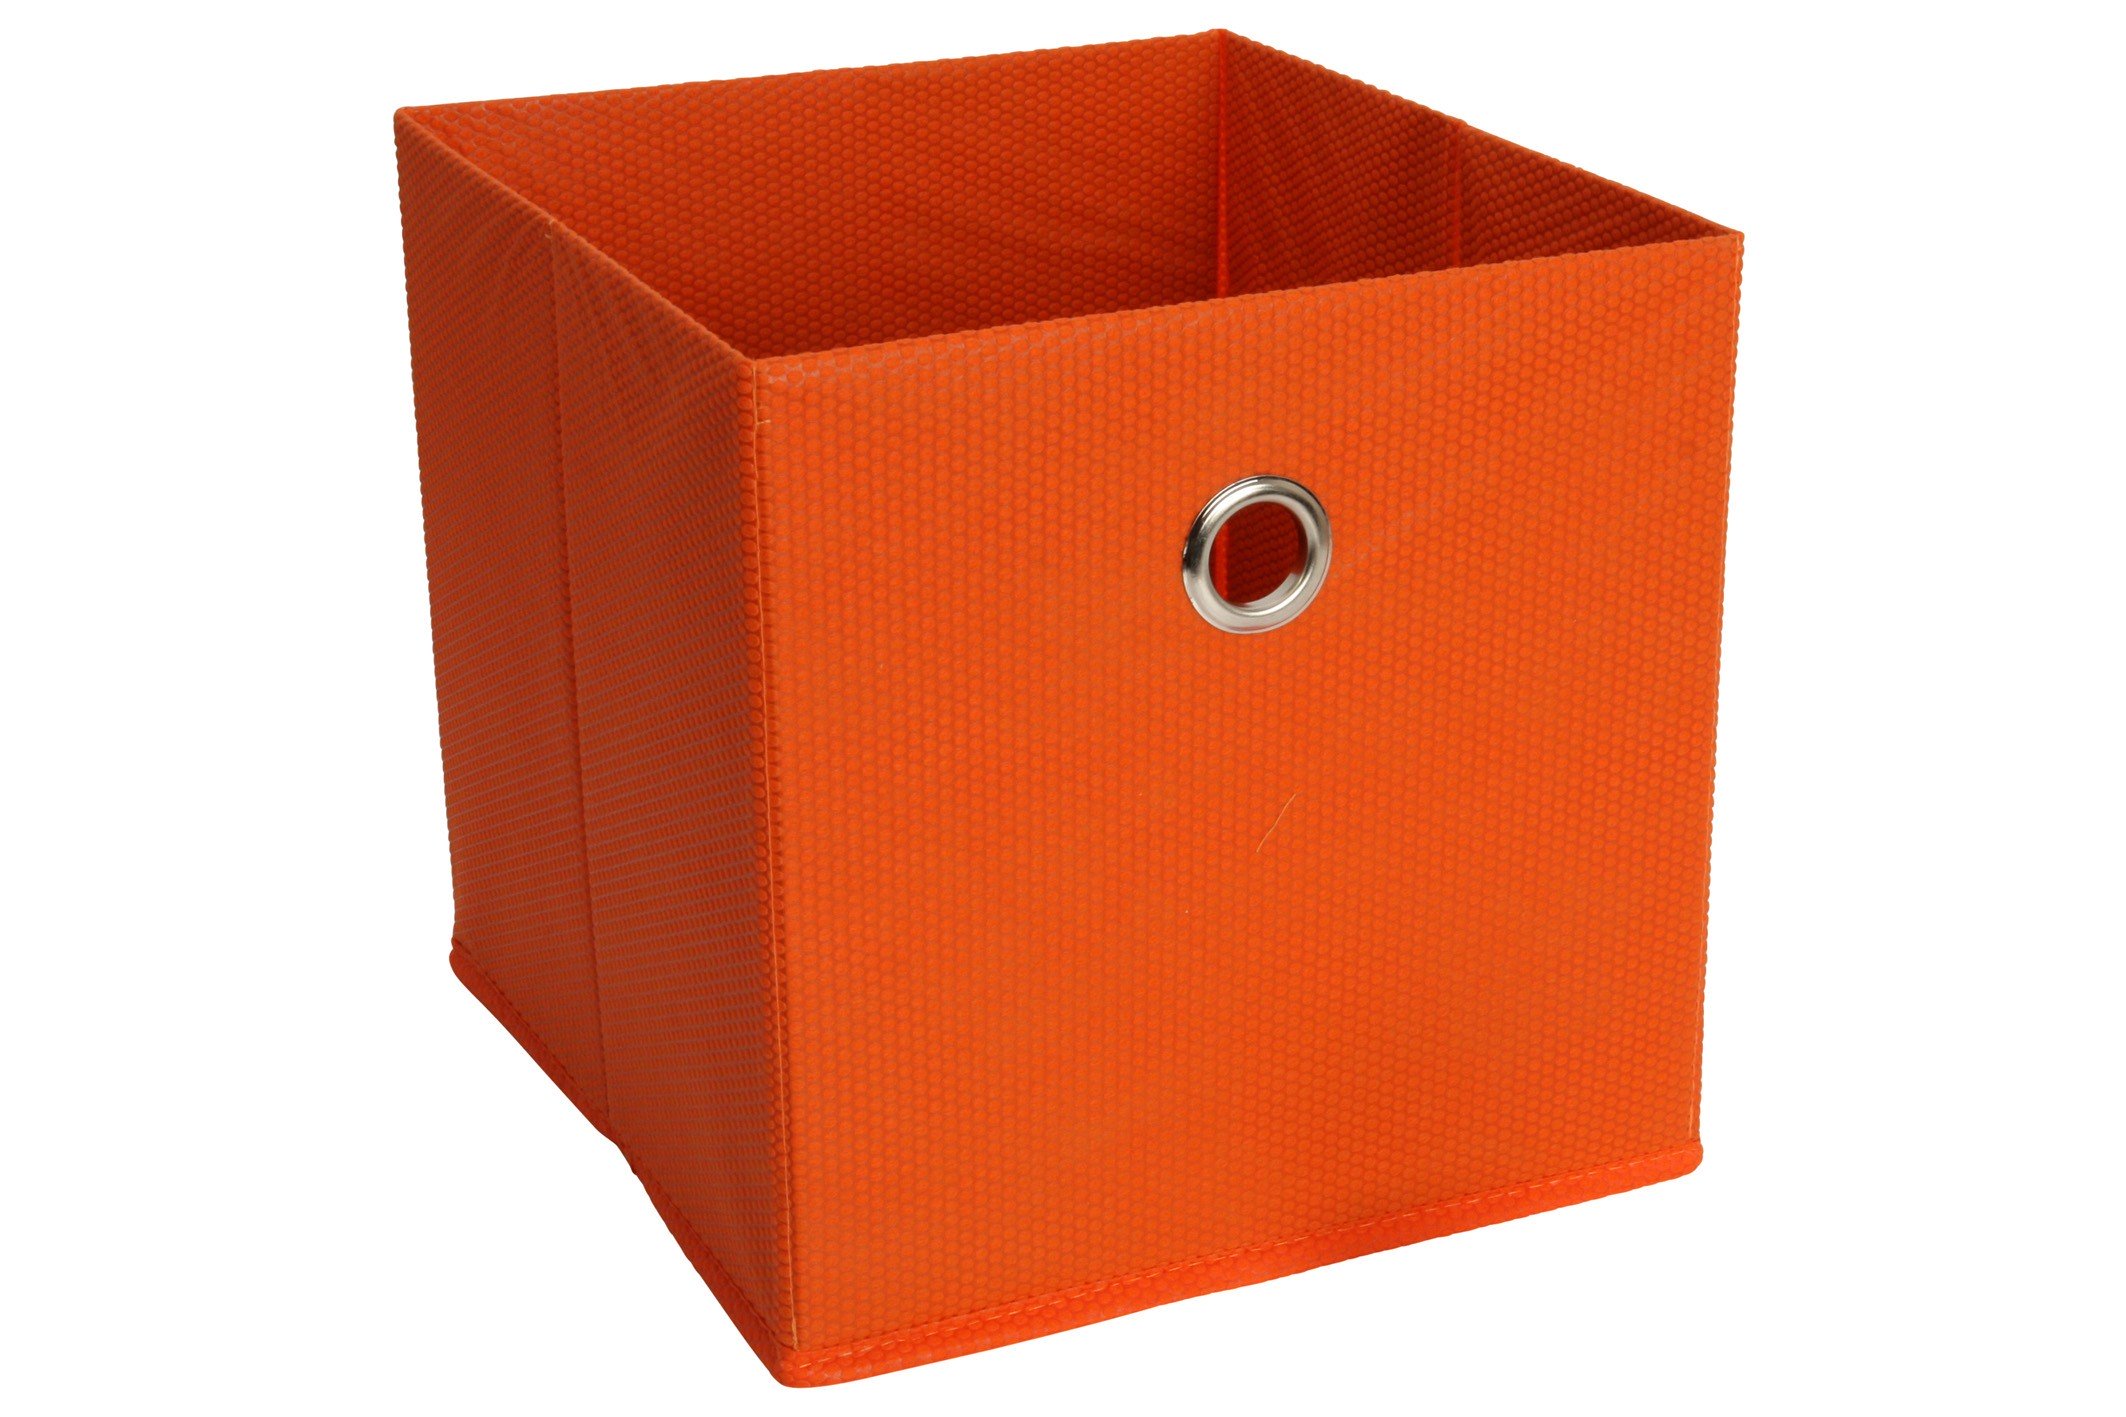 Fabric Box Orange Small from Storage Box